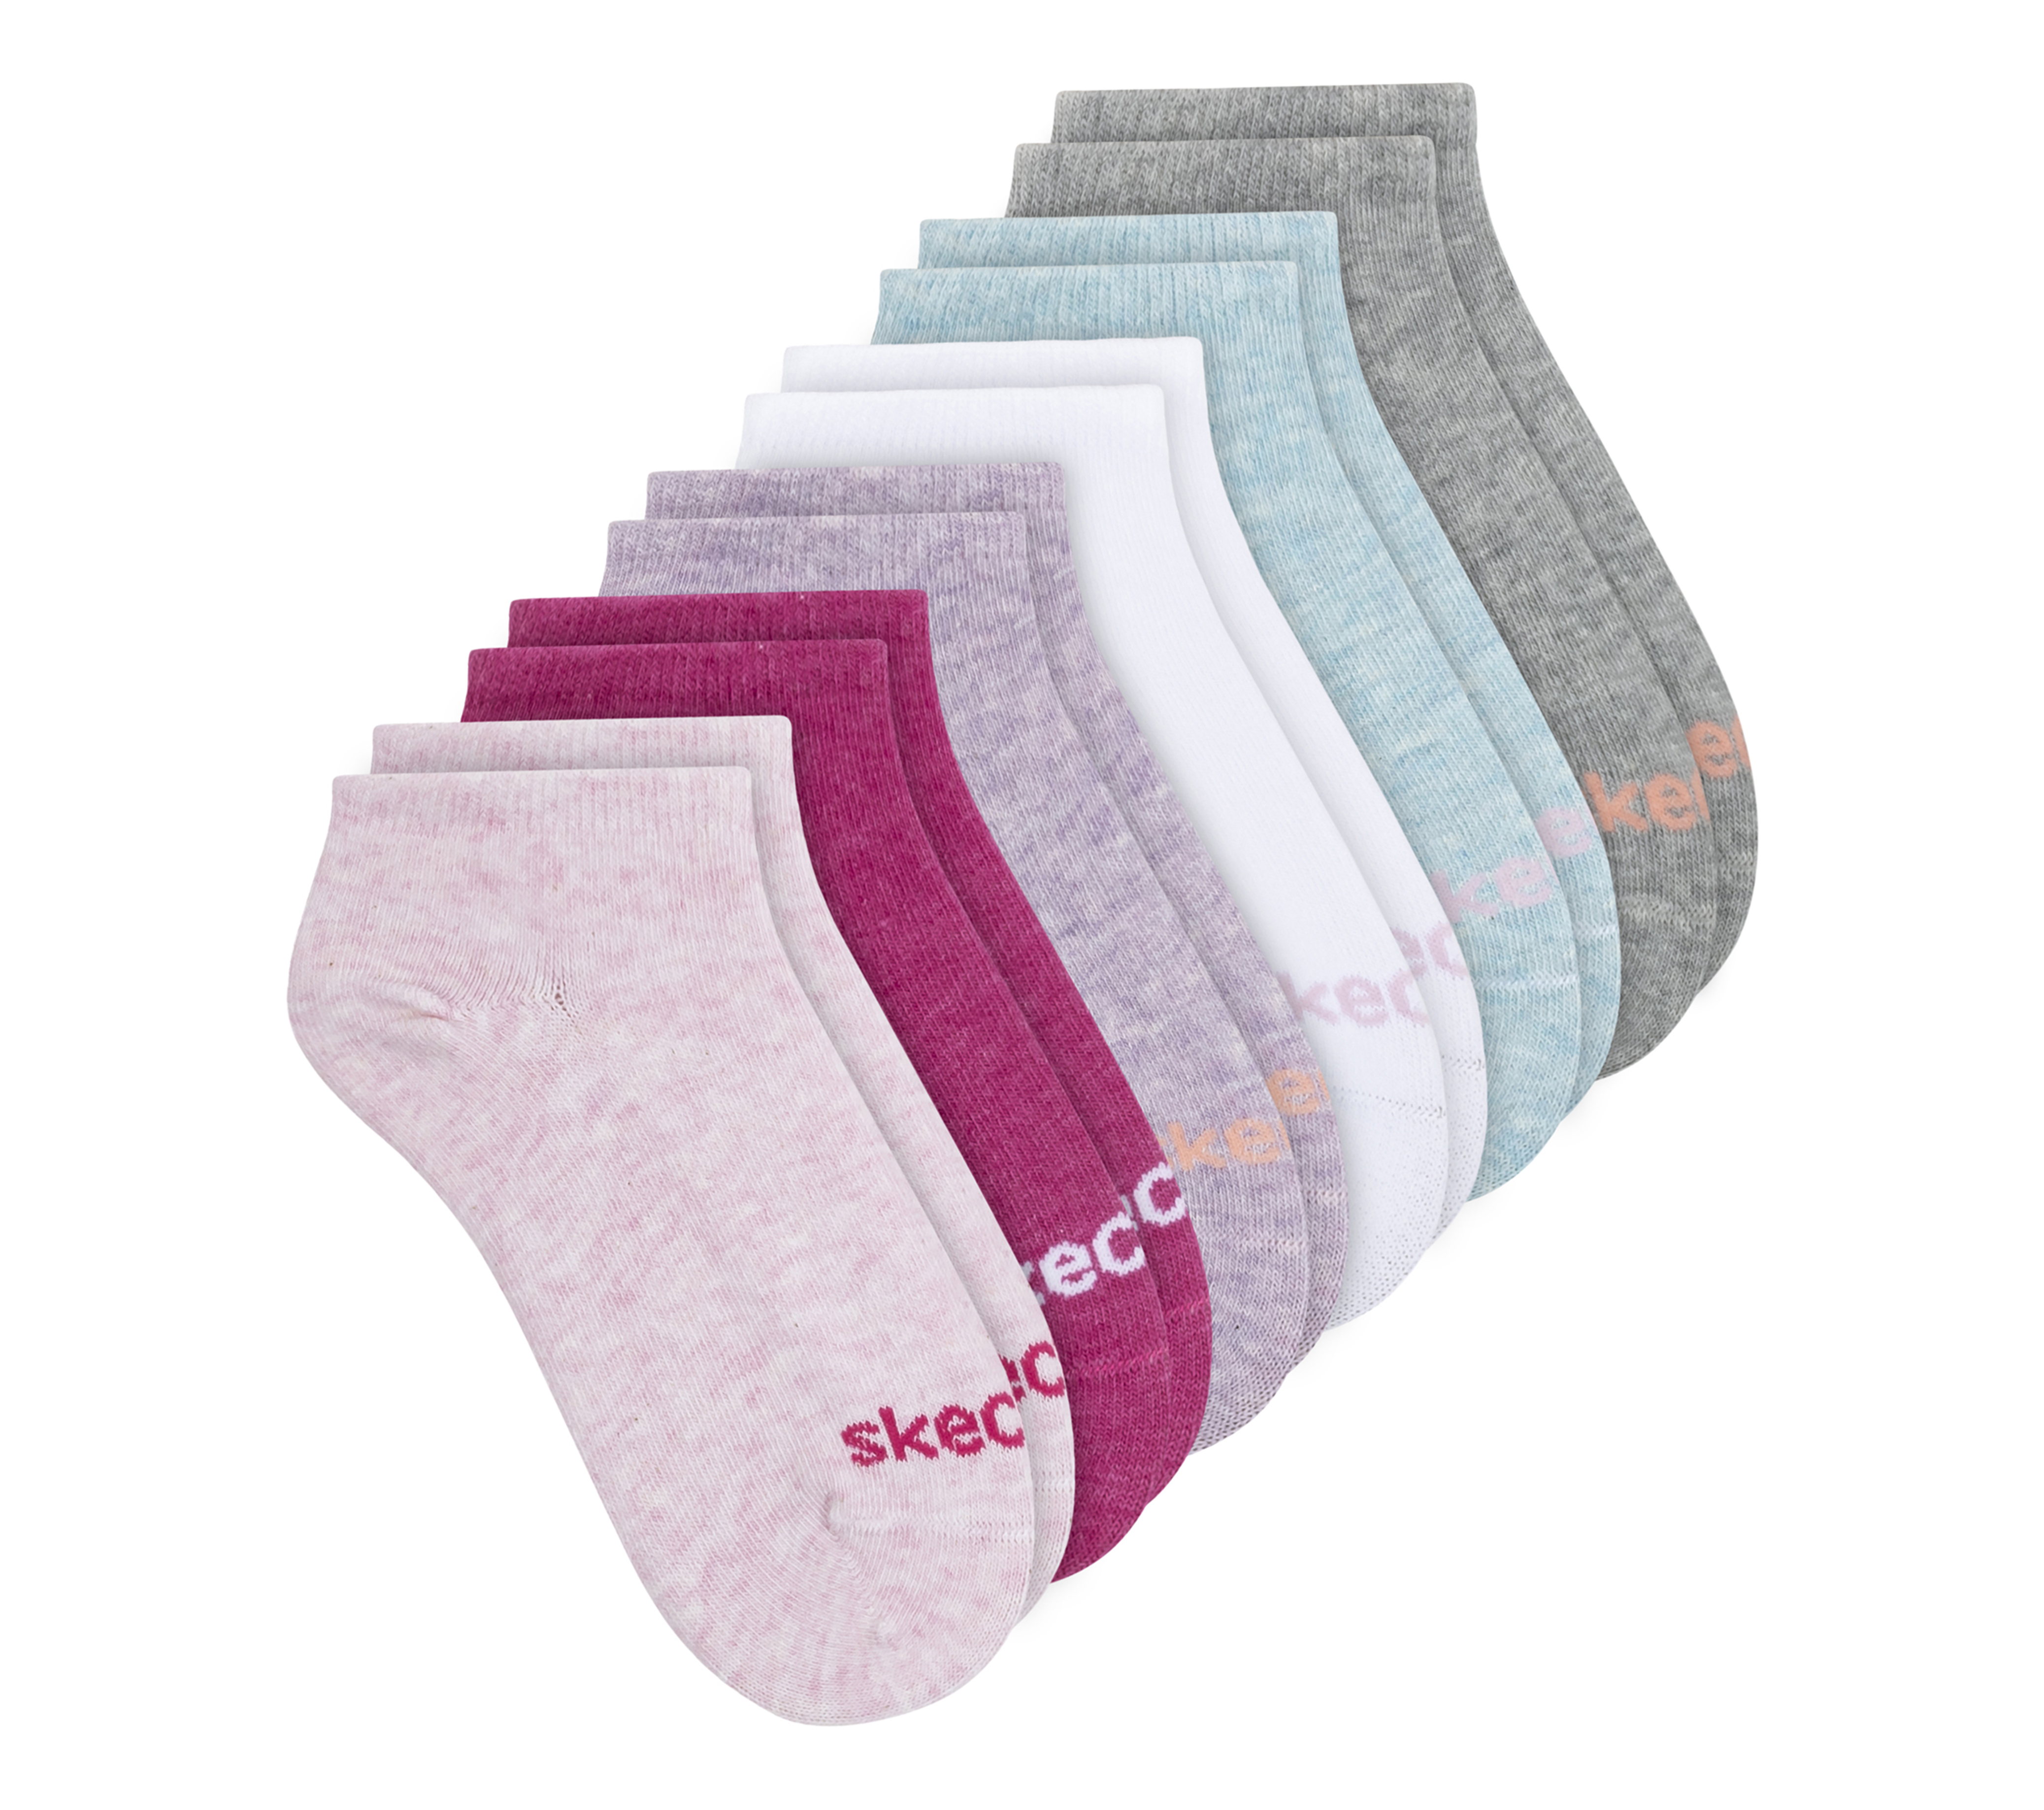 Cotton | SKECHERS Socks Show No 6 Pack